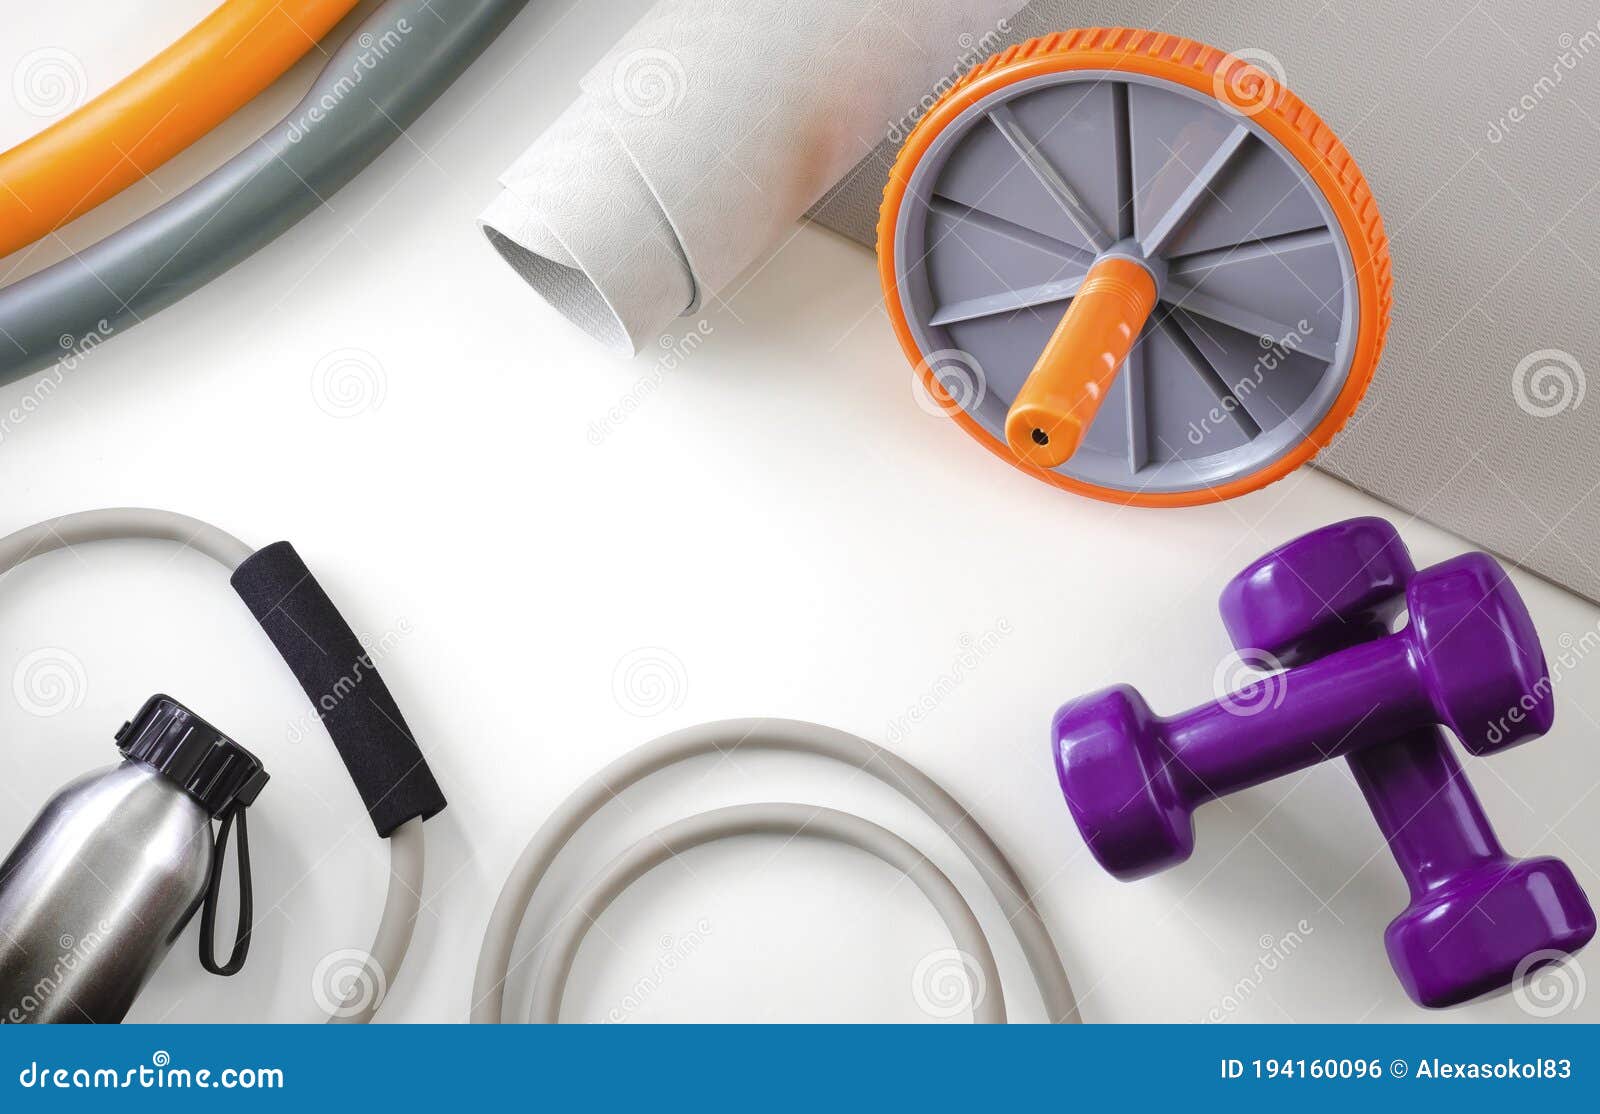 sports kit: dumbbells, ex-pander, yoga mat, roller for press, water bottle, hoop.